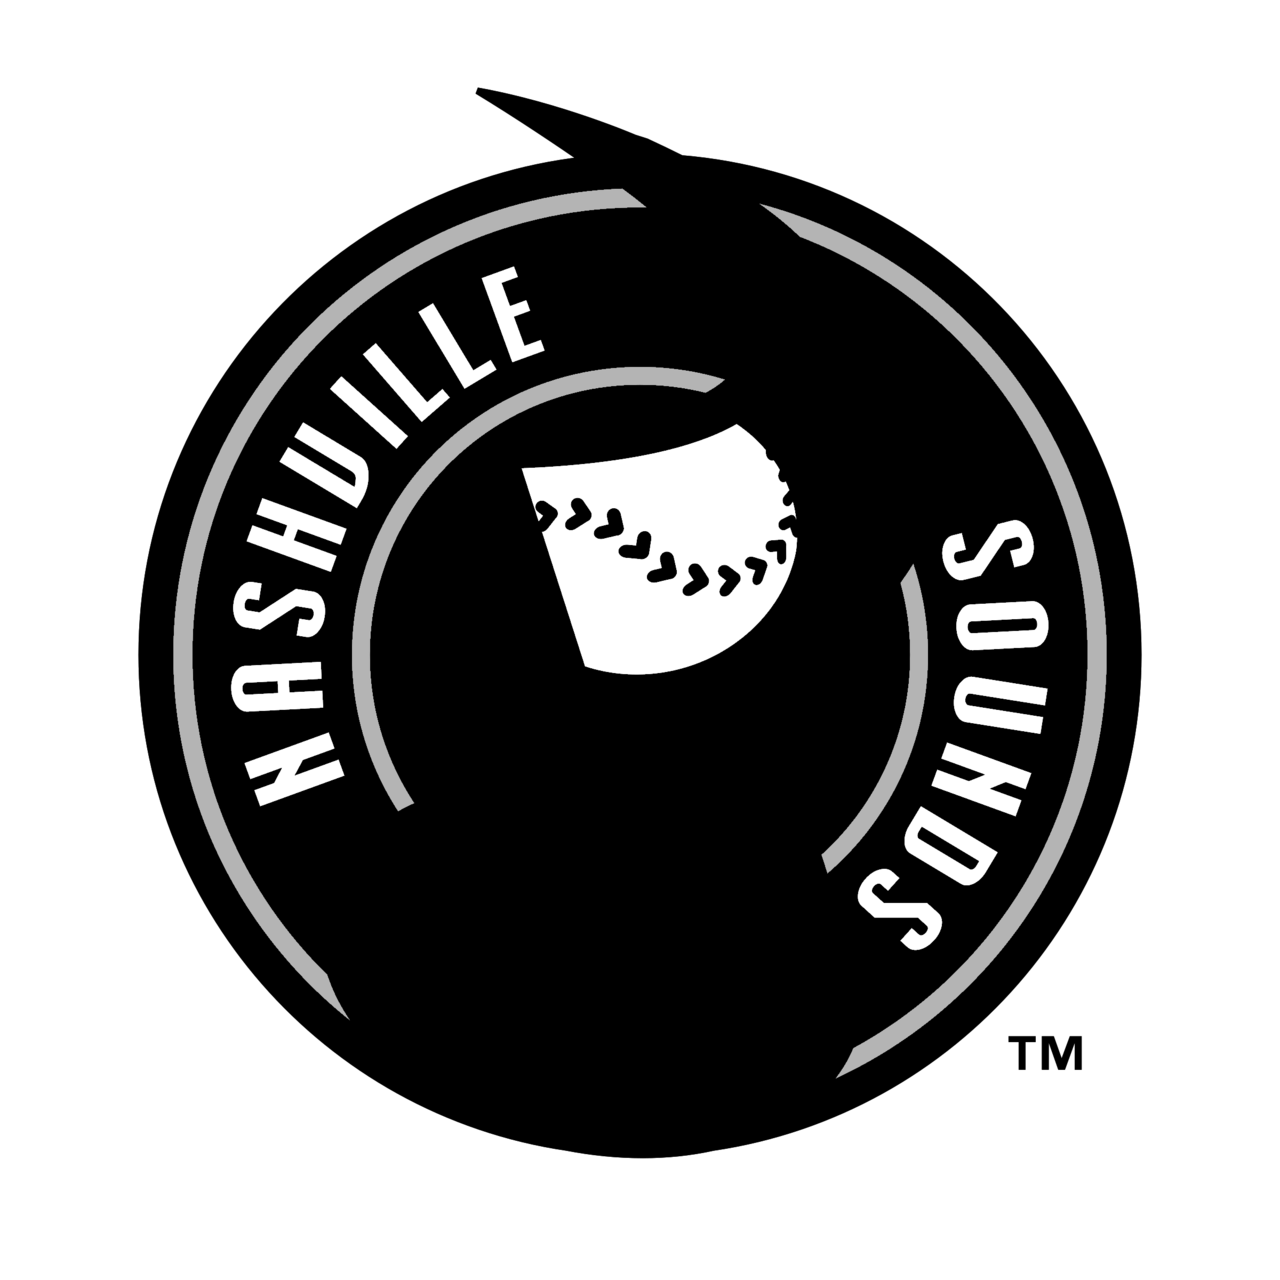 Nashville Sounds Transparent Image